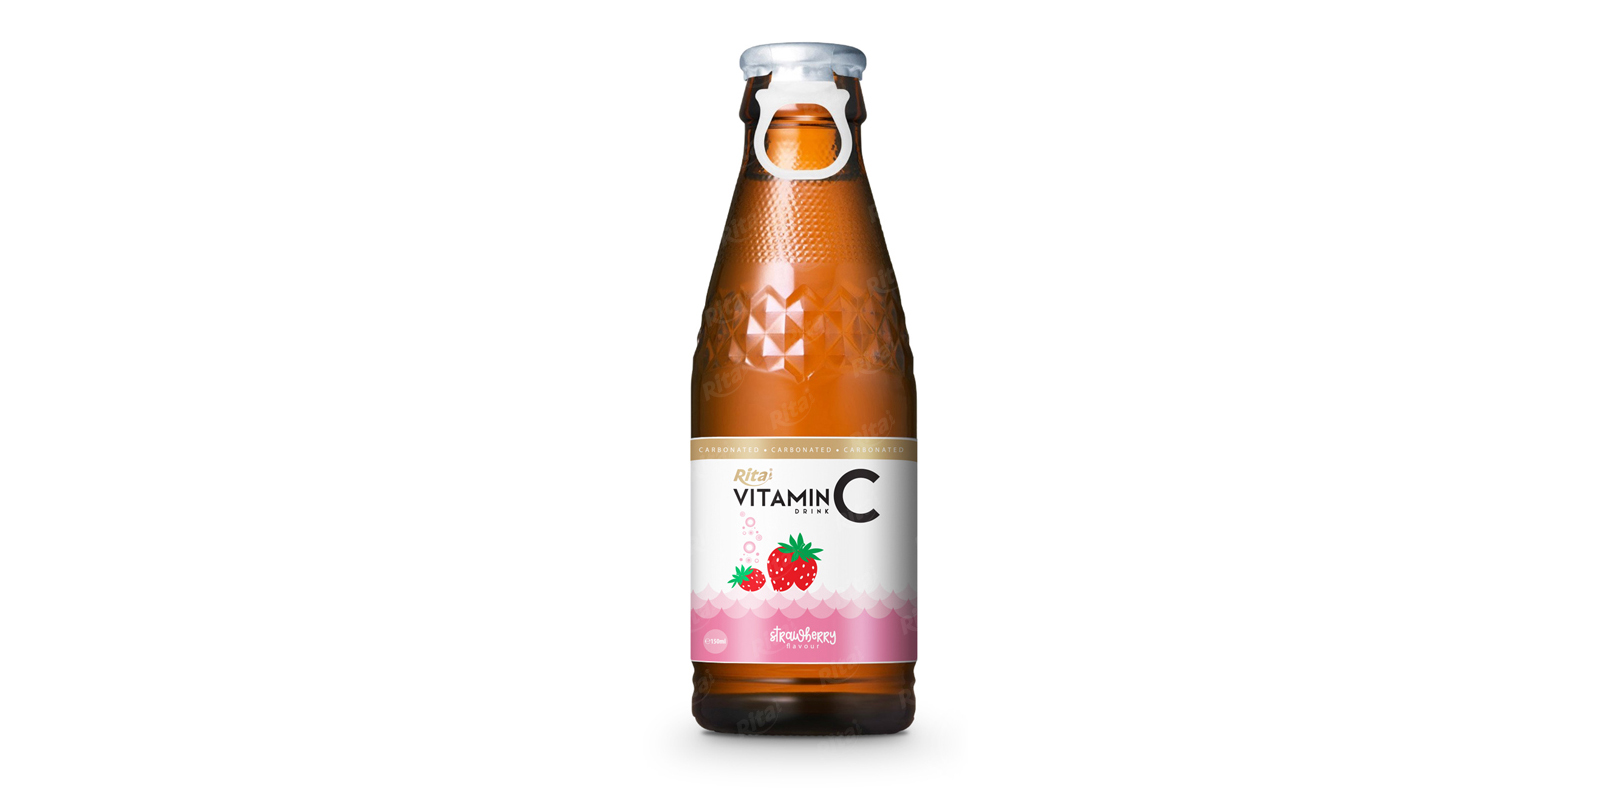 Vitamin C with strawberry 150ml from RITA India